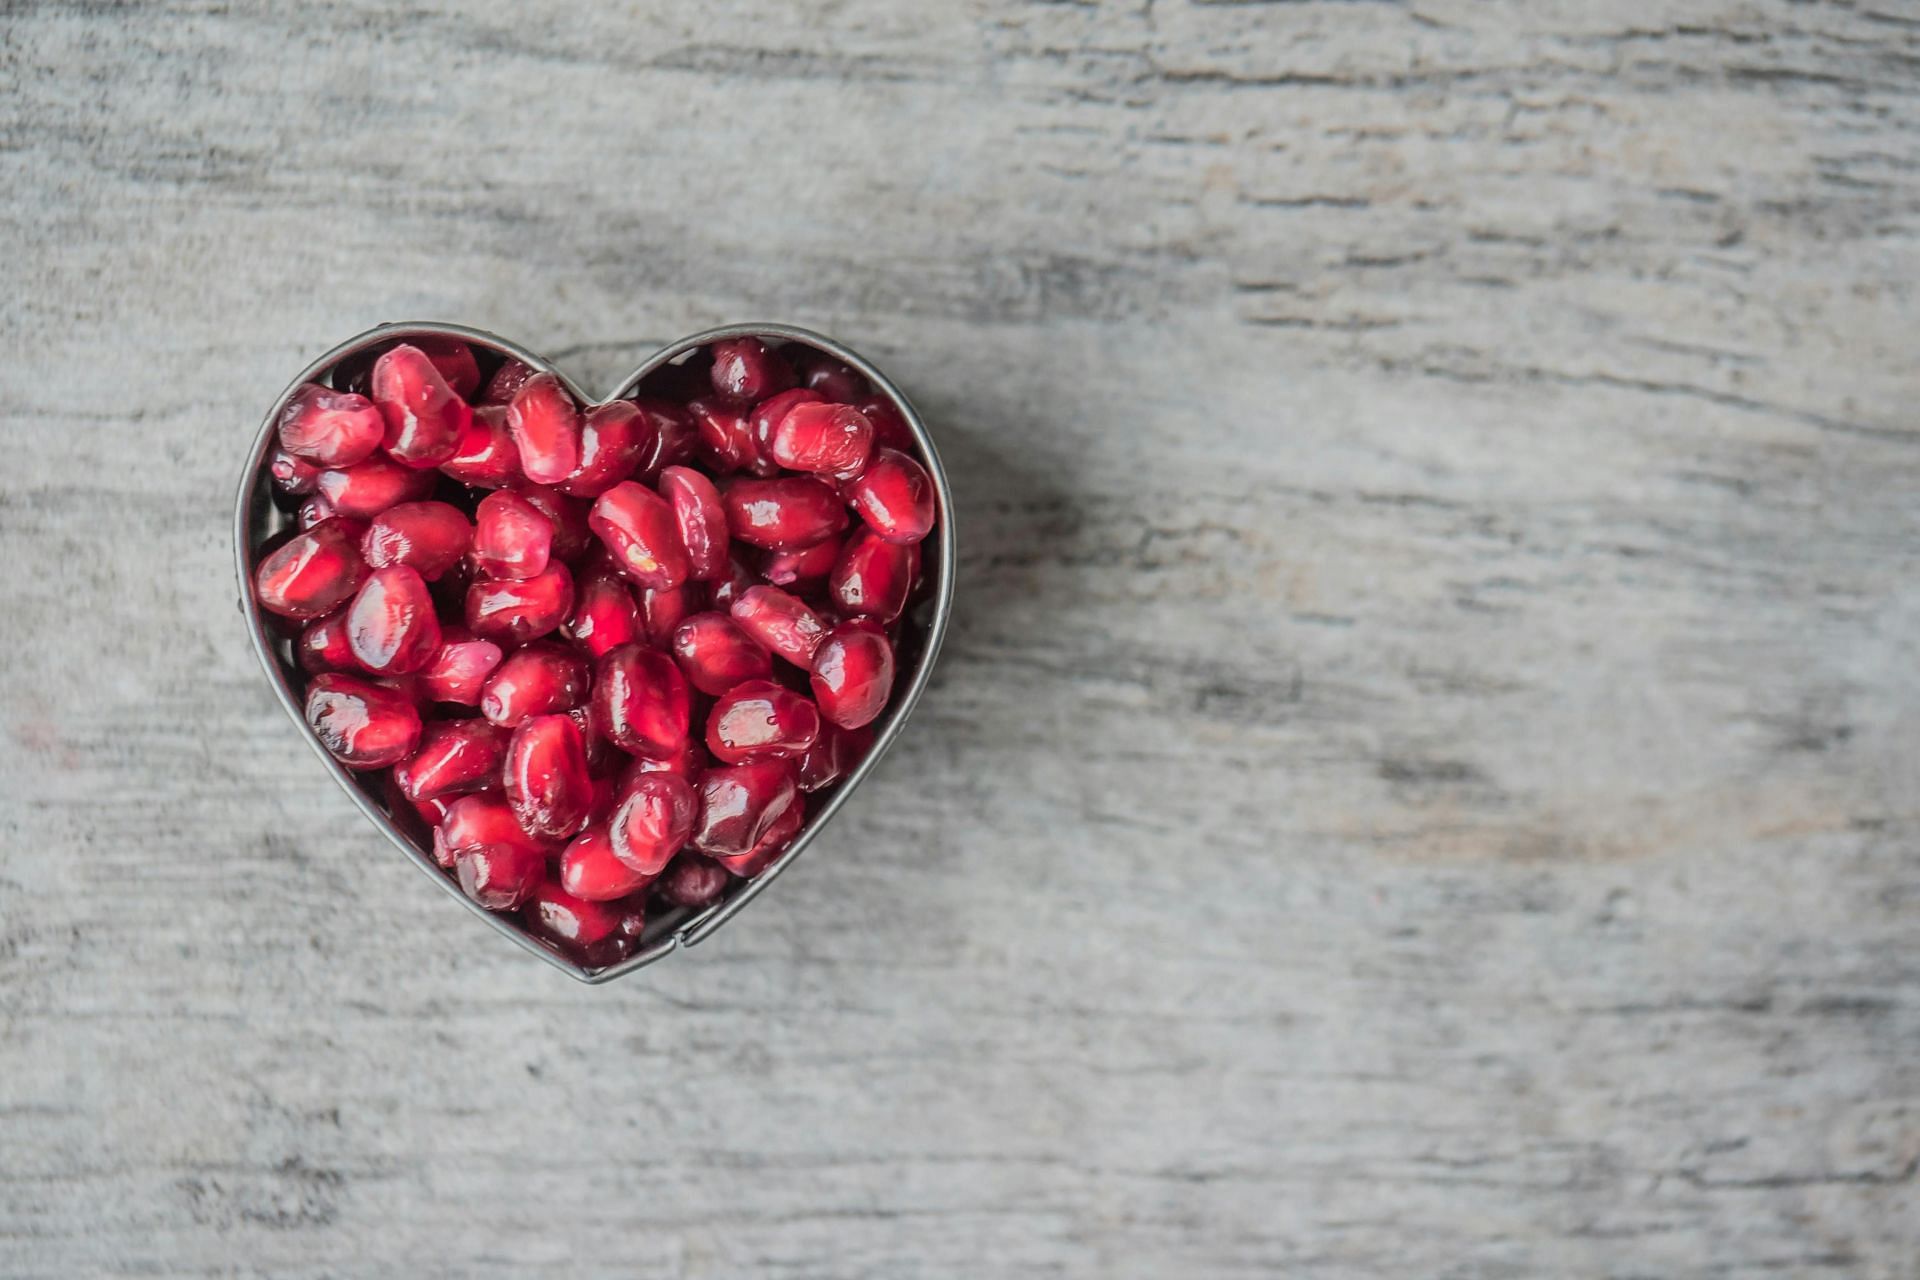 Pomegranate as anti wrinkle food (image sourced via Pexels / Photo by Jessica)